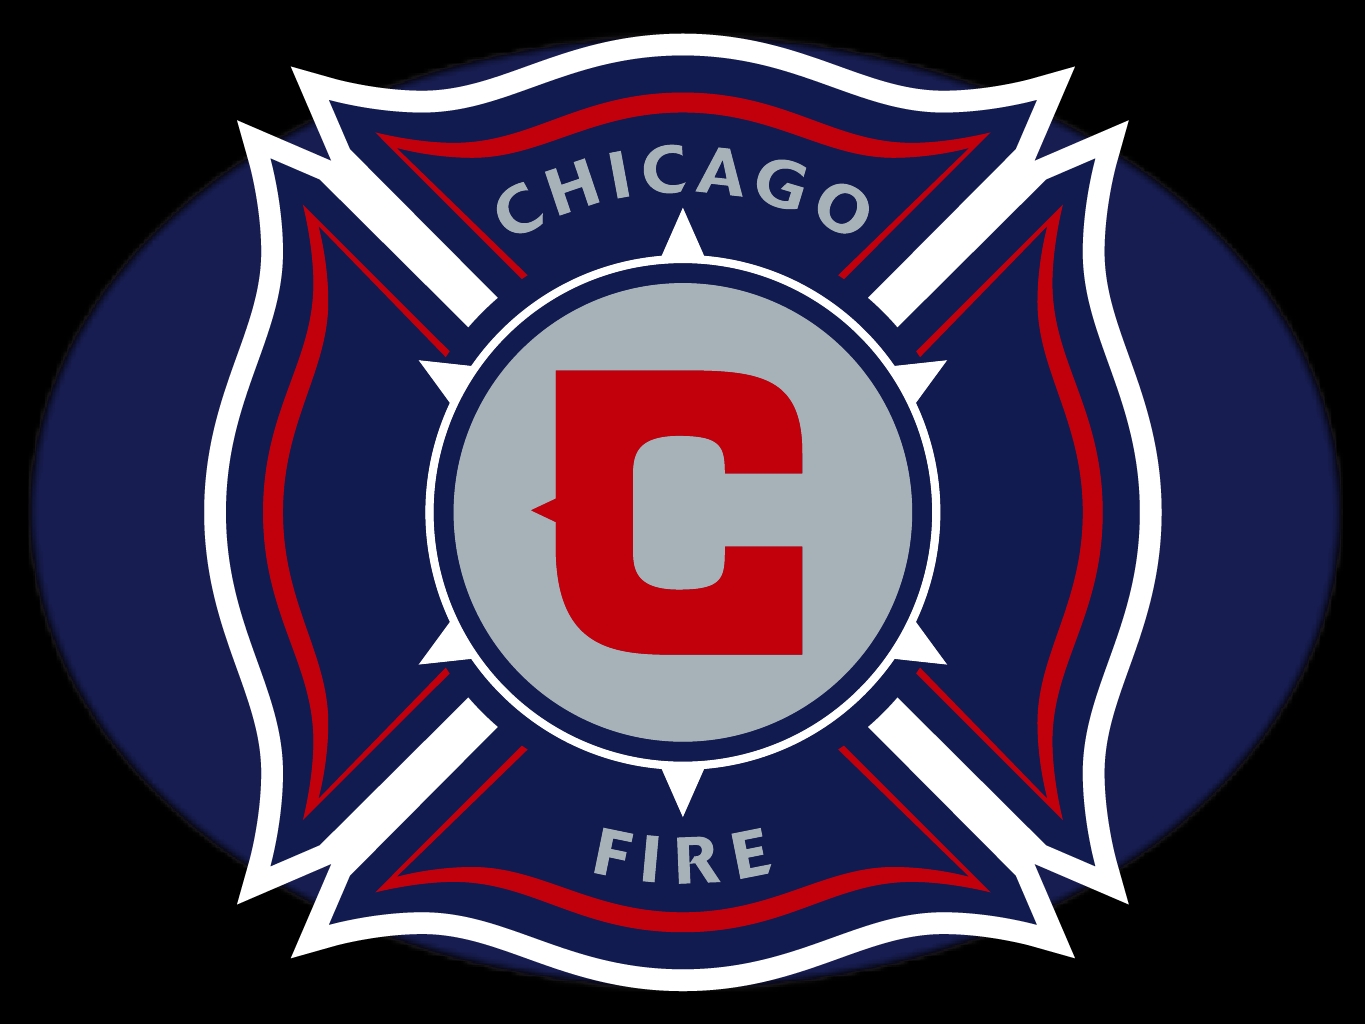 Chicago Fire Soccer Club Football Wallpaper